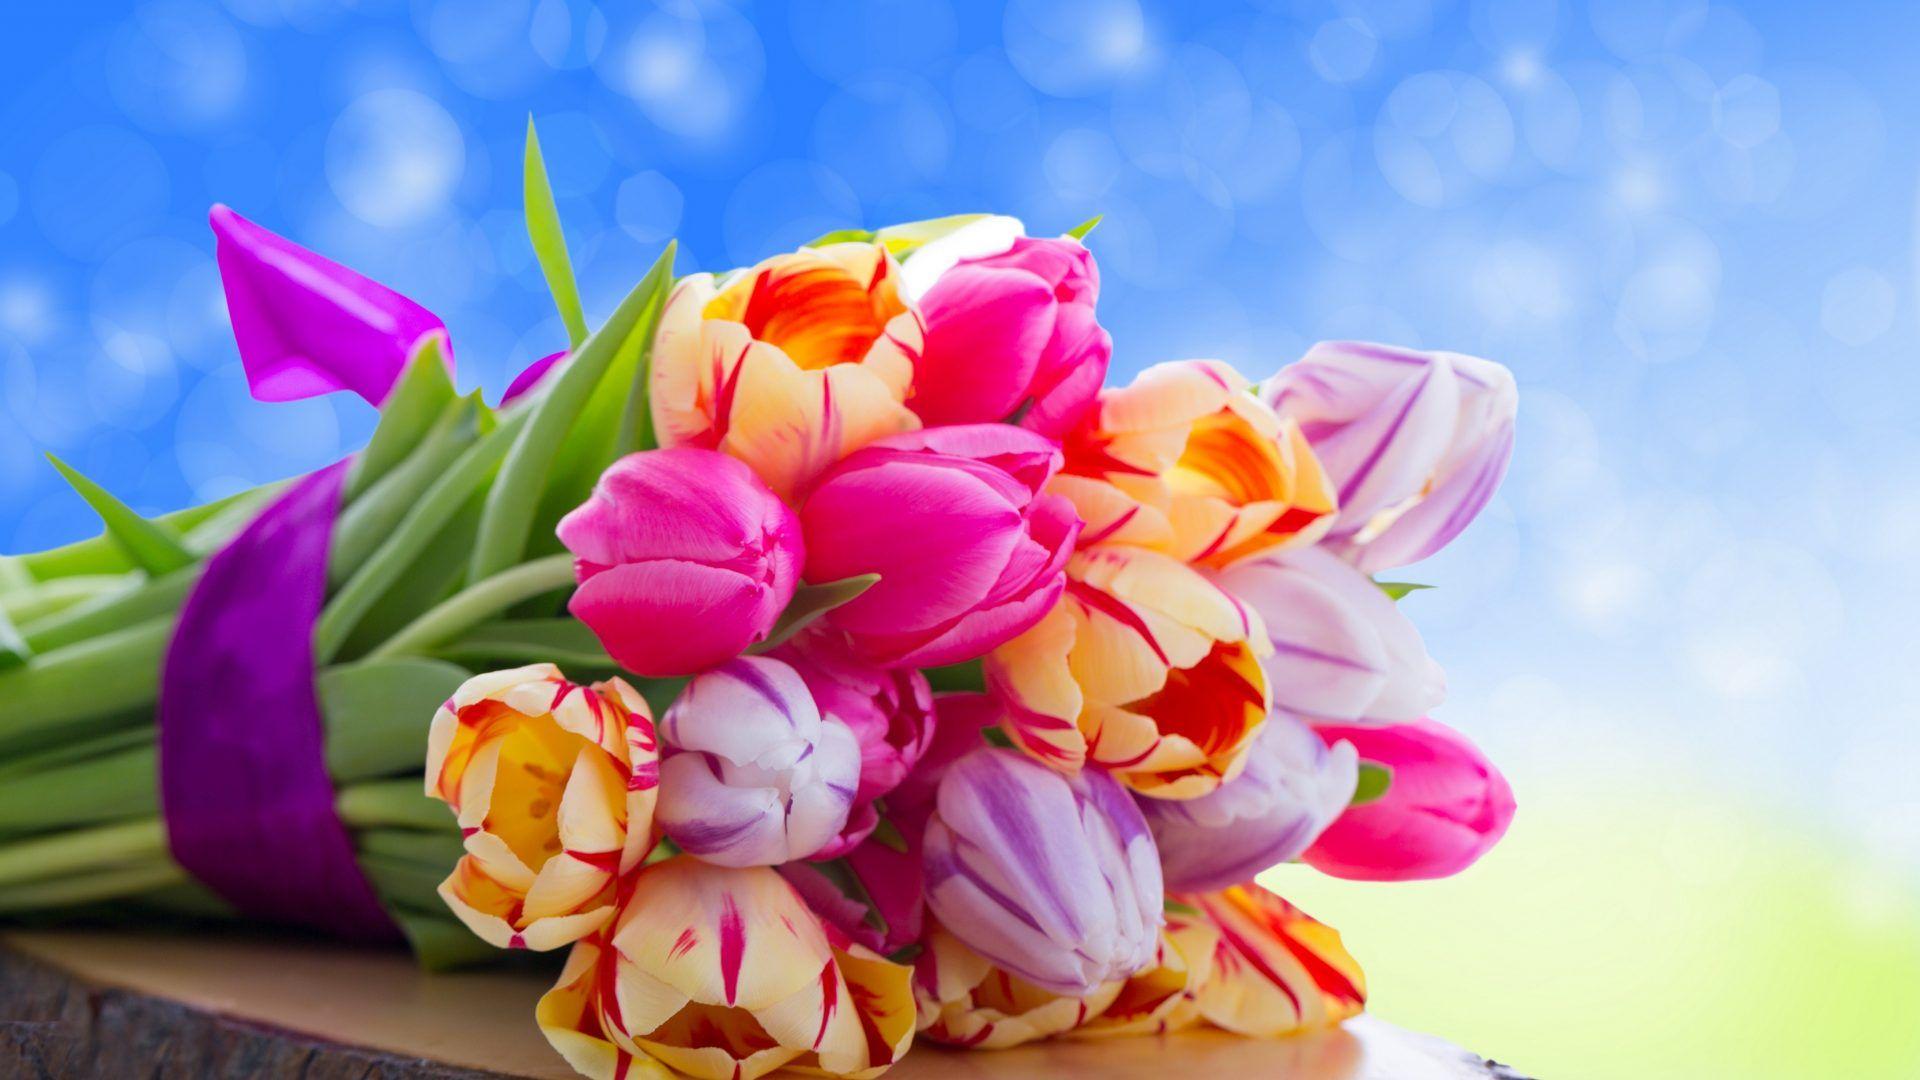 beautiful love wallpaper for desktop full screen flowers tulips